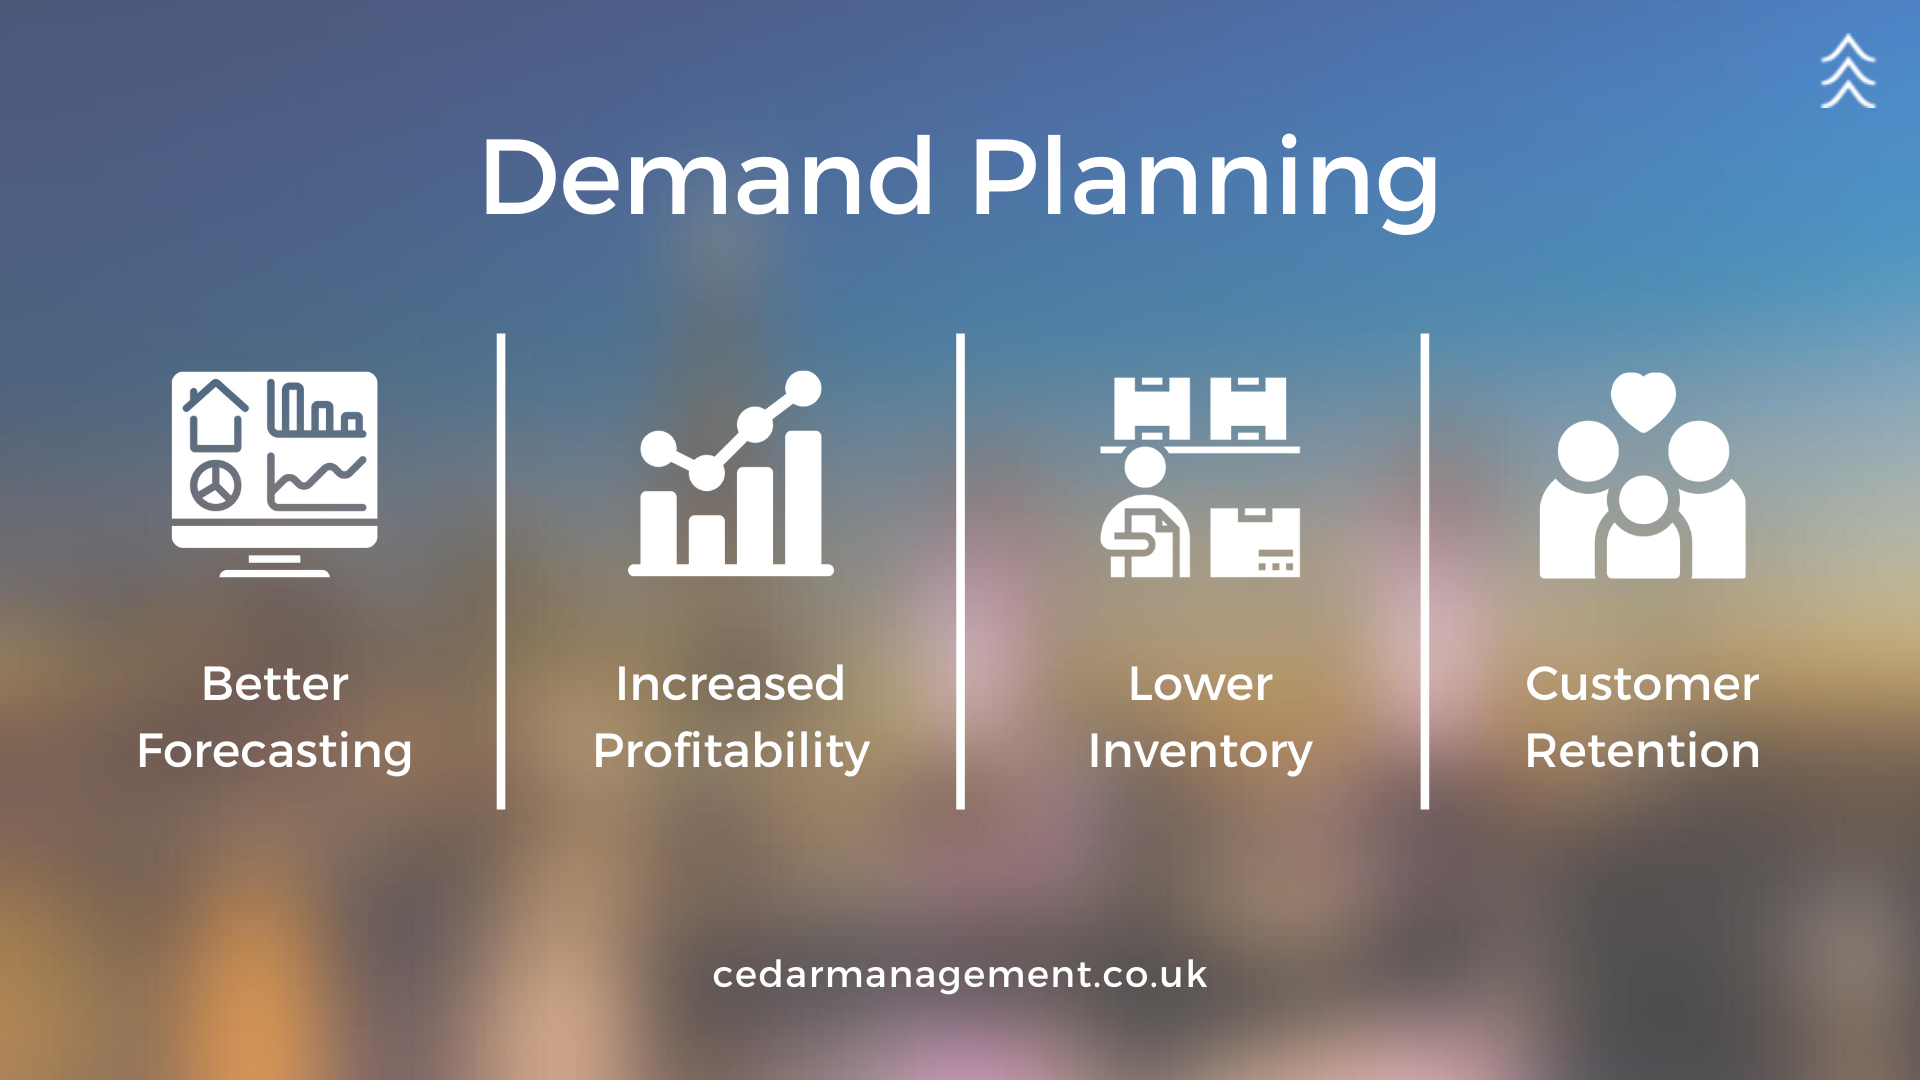 Demand planning. Demand Planner. Demand planning presentation. Demand planning фото задач. Product demand